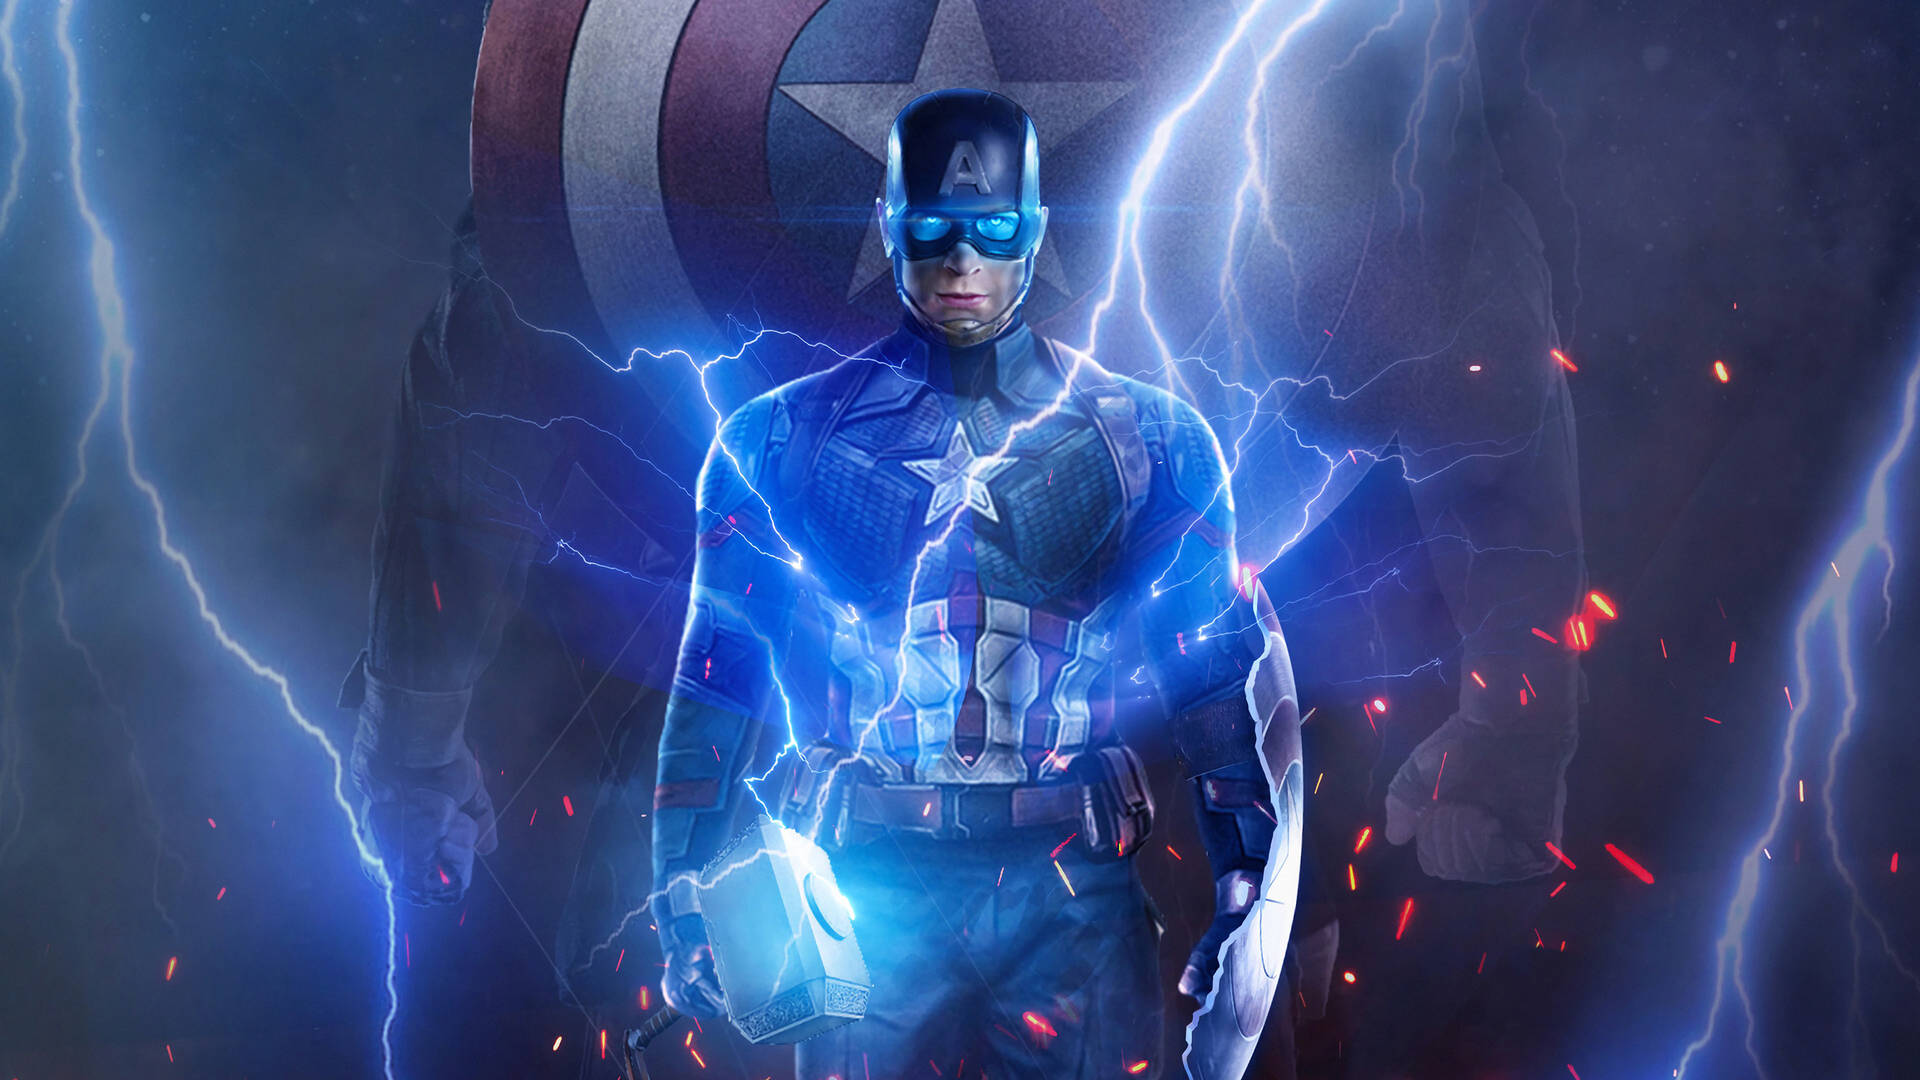 Captain America Holding Mjolnir - Power Unleashed Background